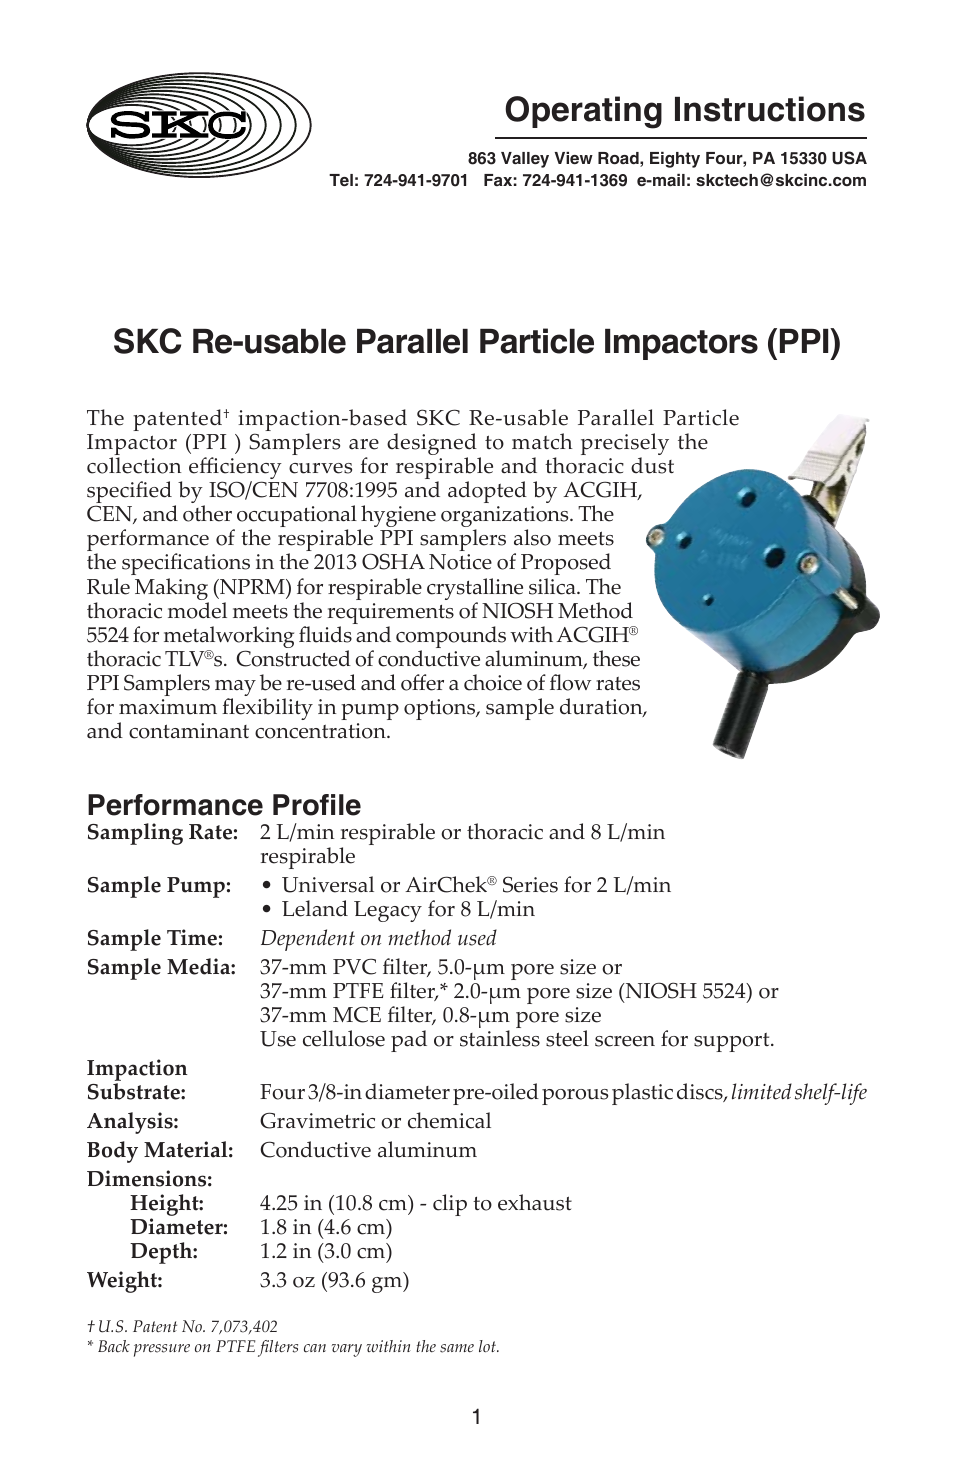 225-380 Parallel Particle Impactor